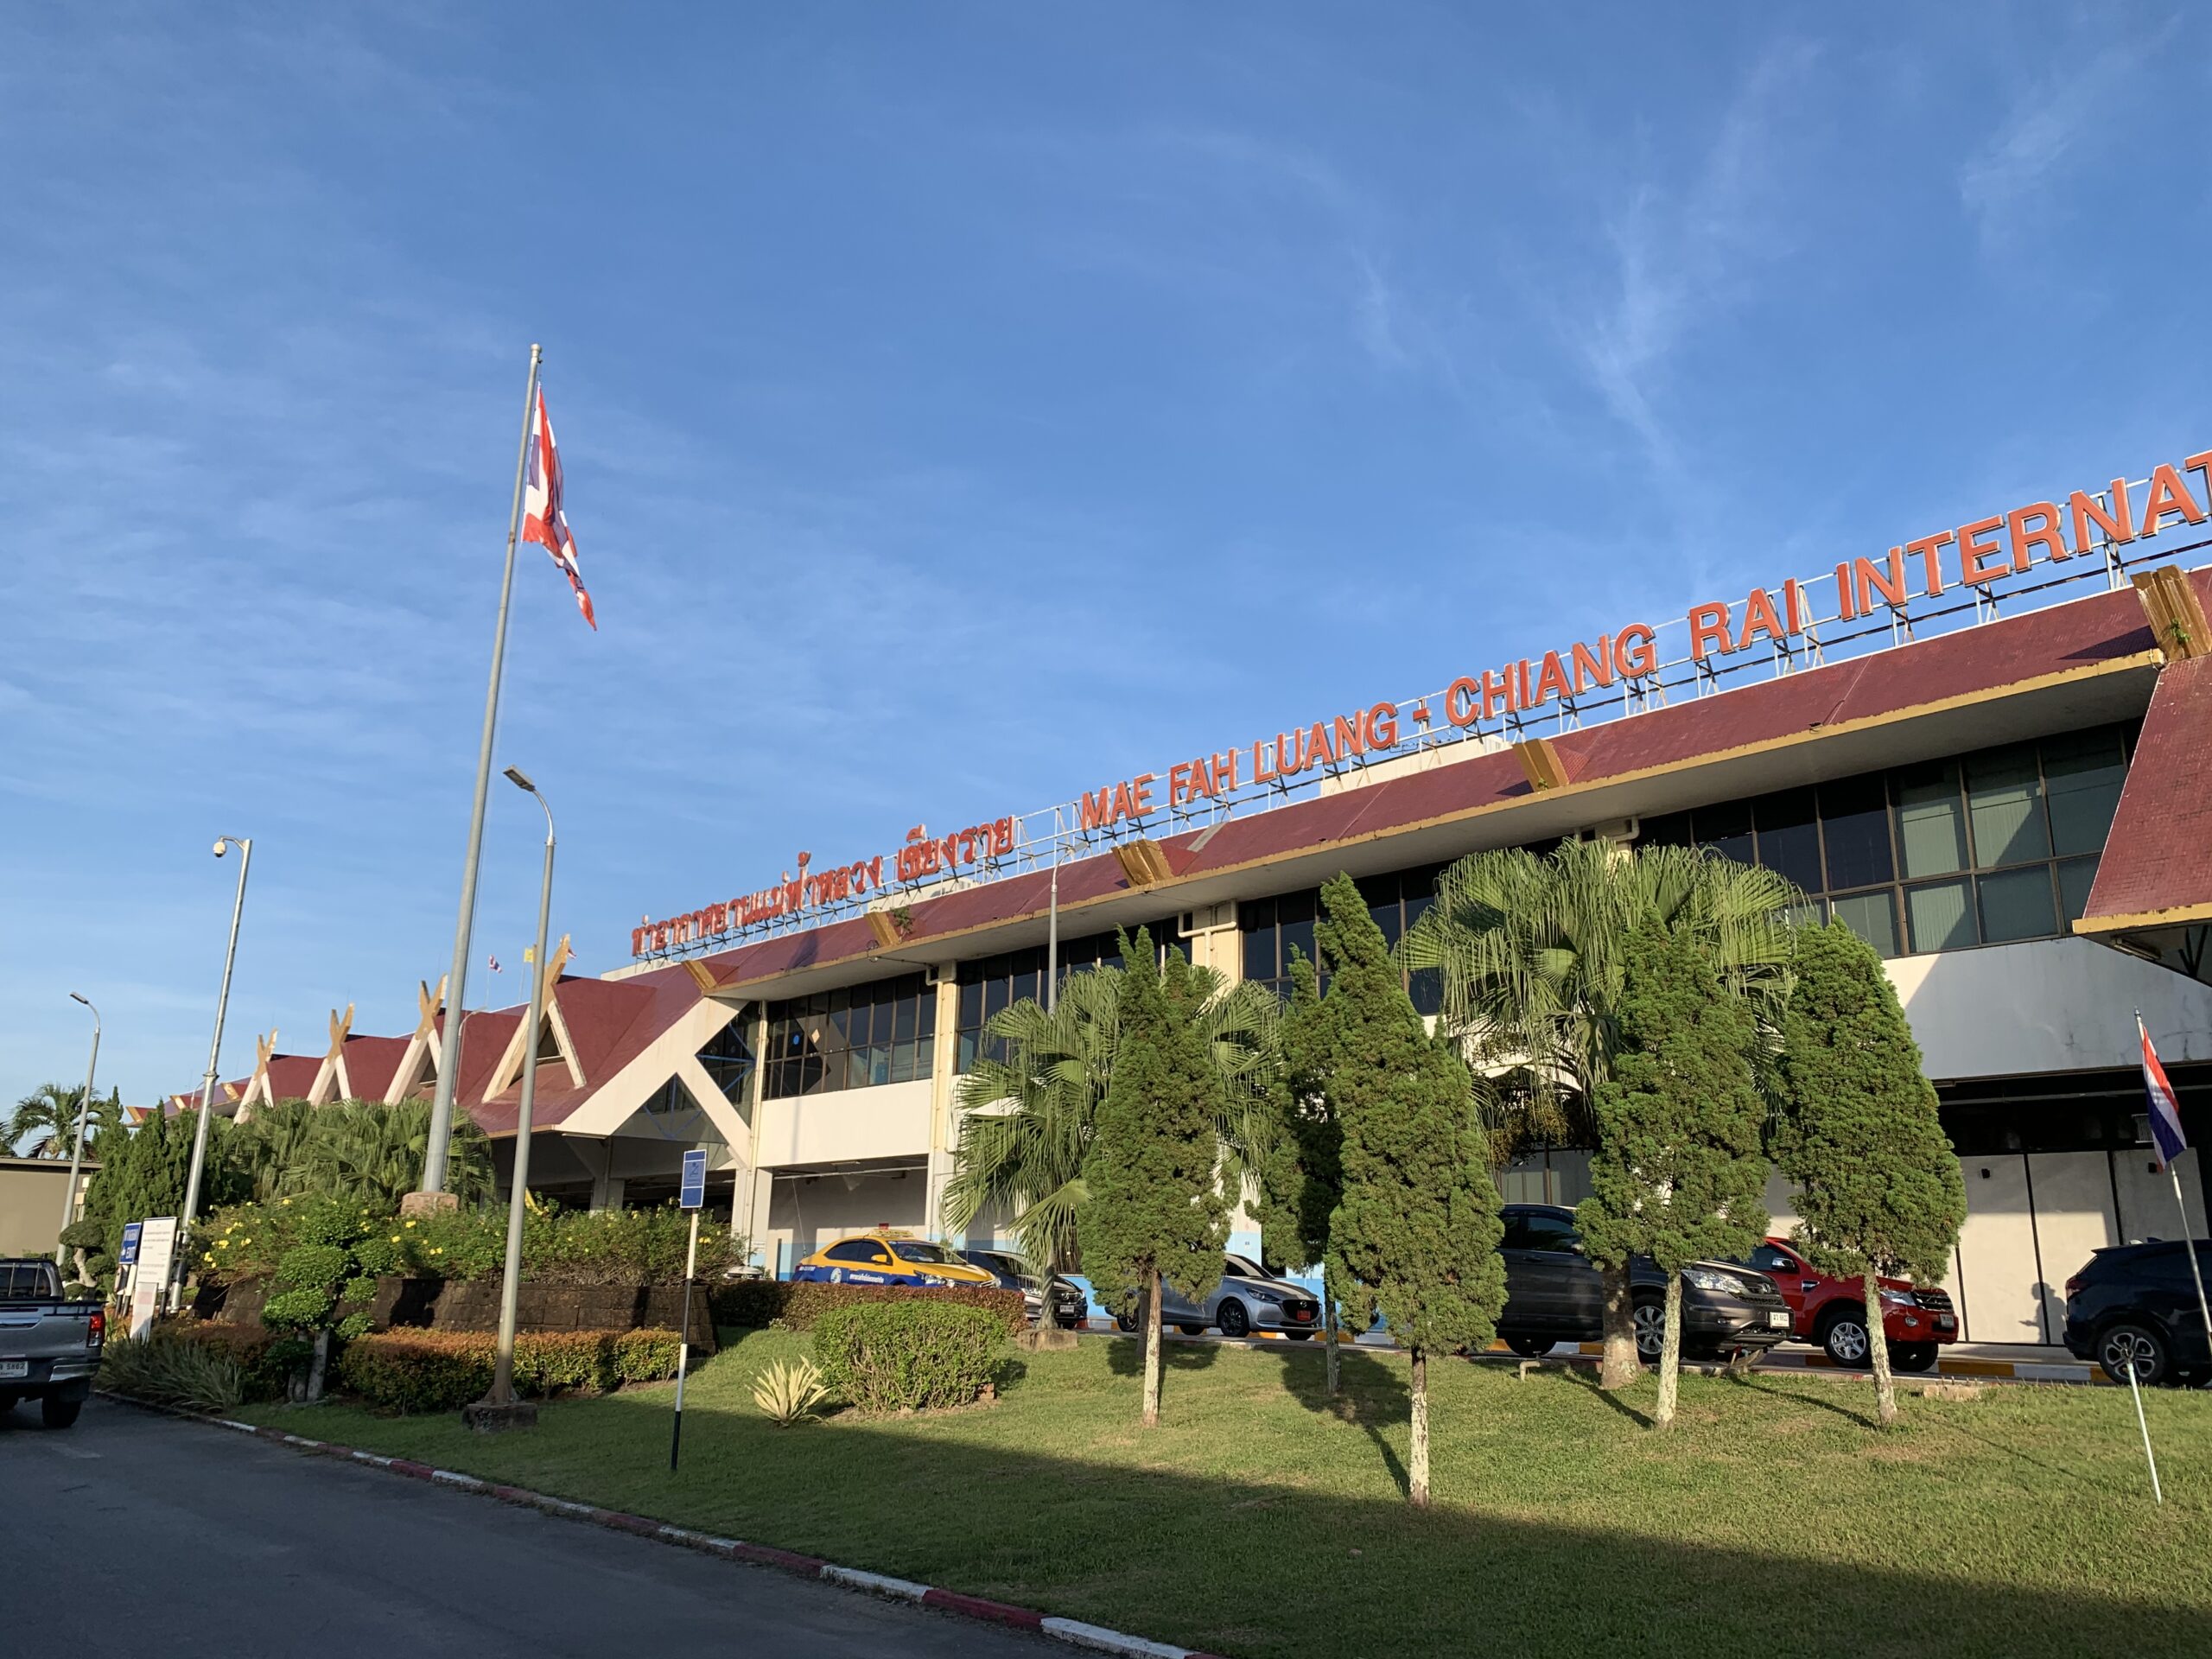 The Chiang Rai Airport